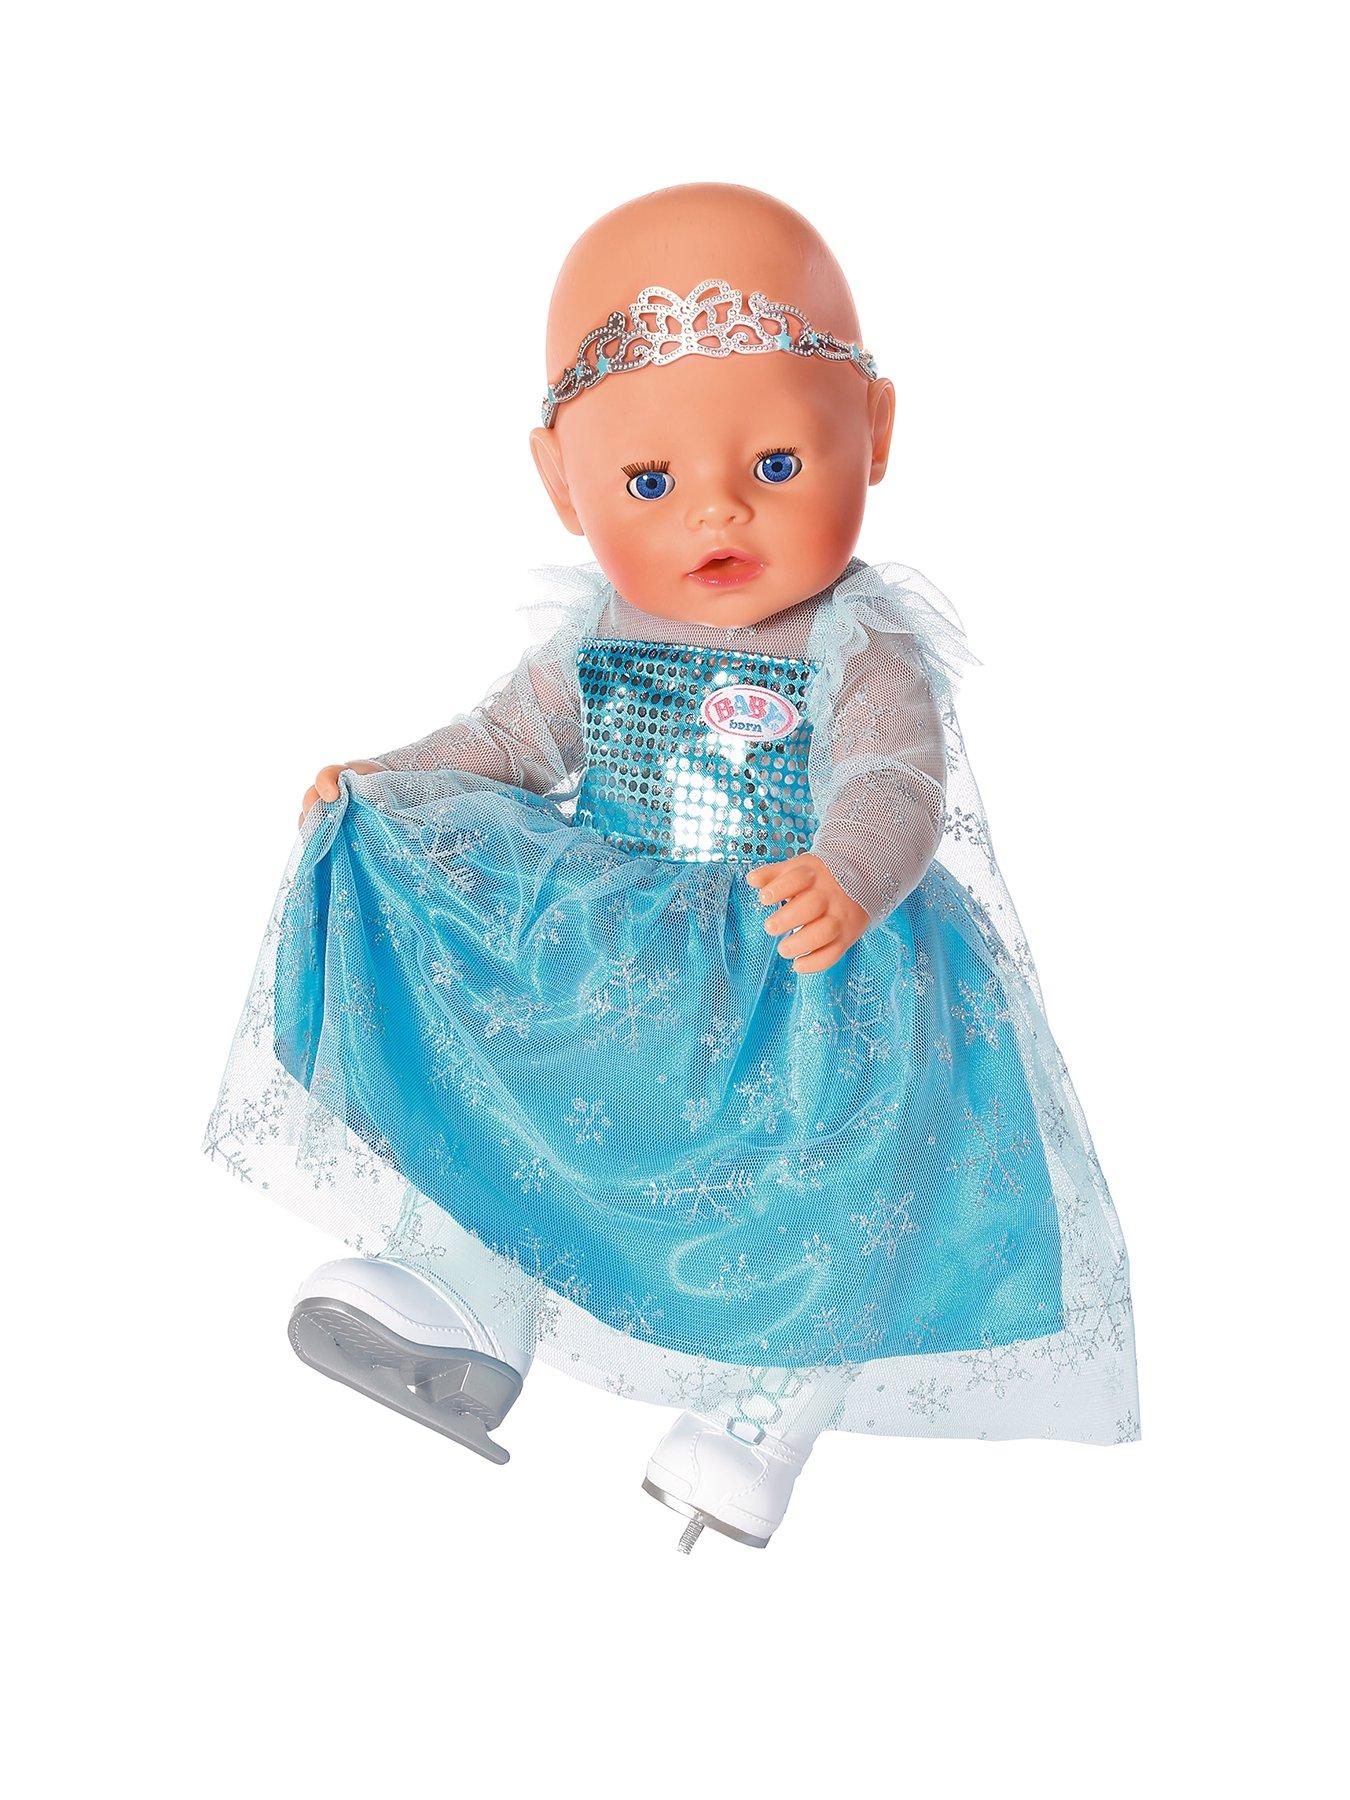 baby born princess doll